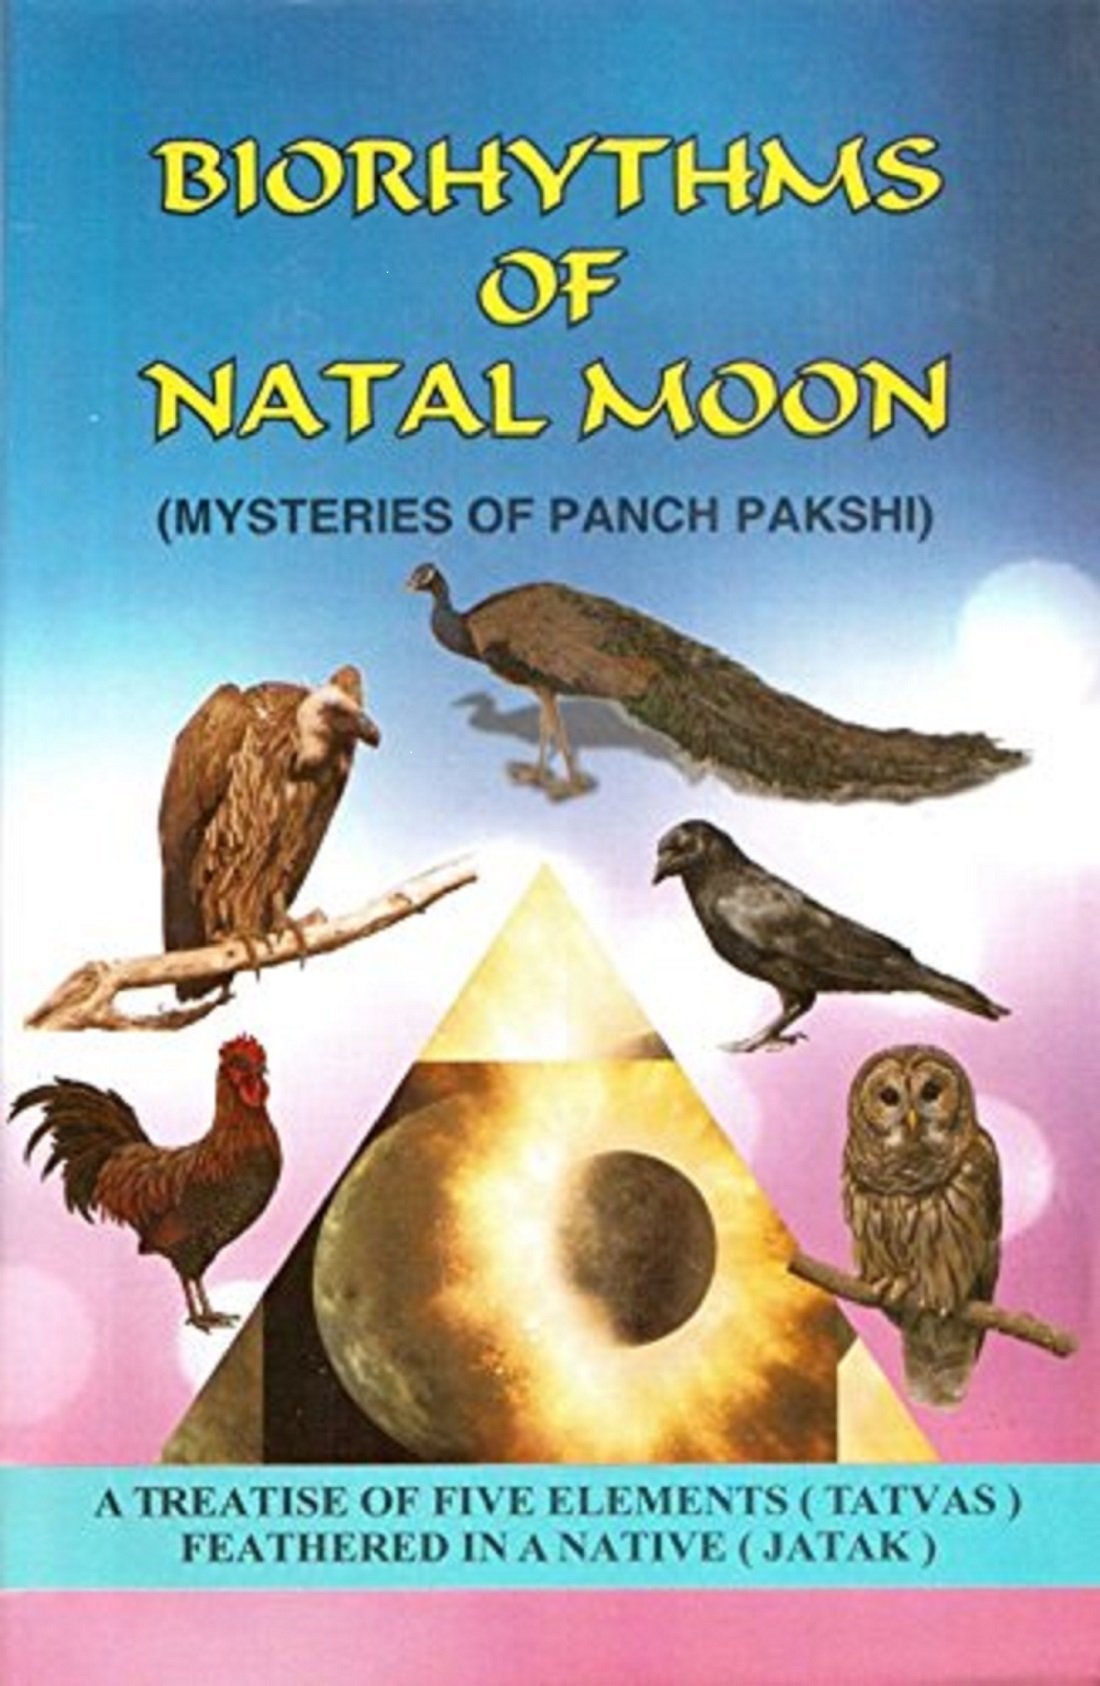 Biorthythms of Natal Moon Mysteries of Panch Pakshi in English Hardbound by Dt. U. S. Pulippani